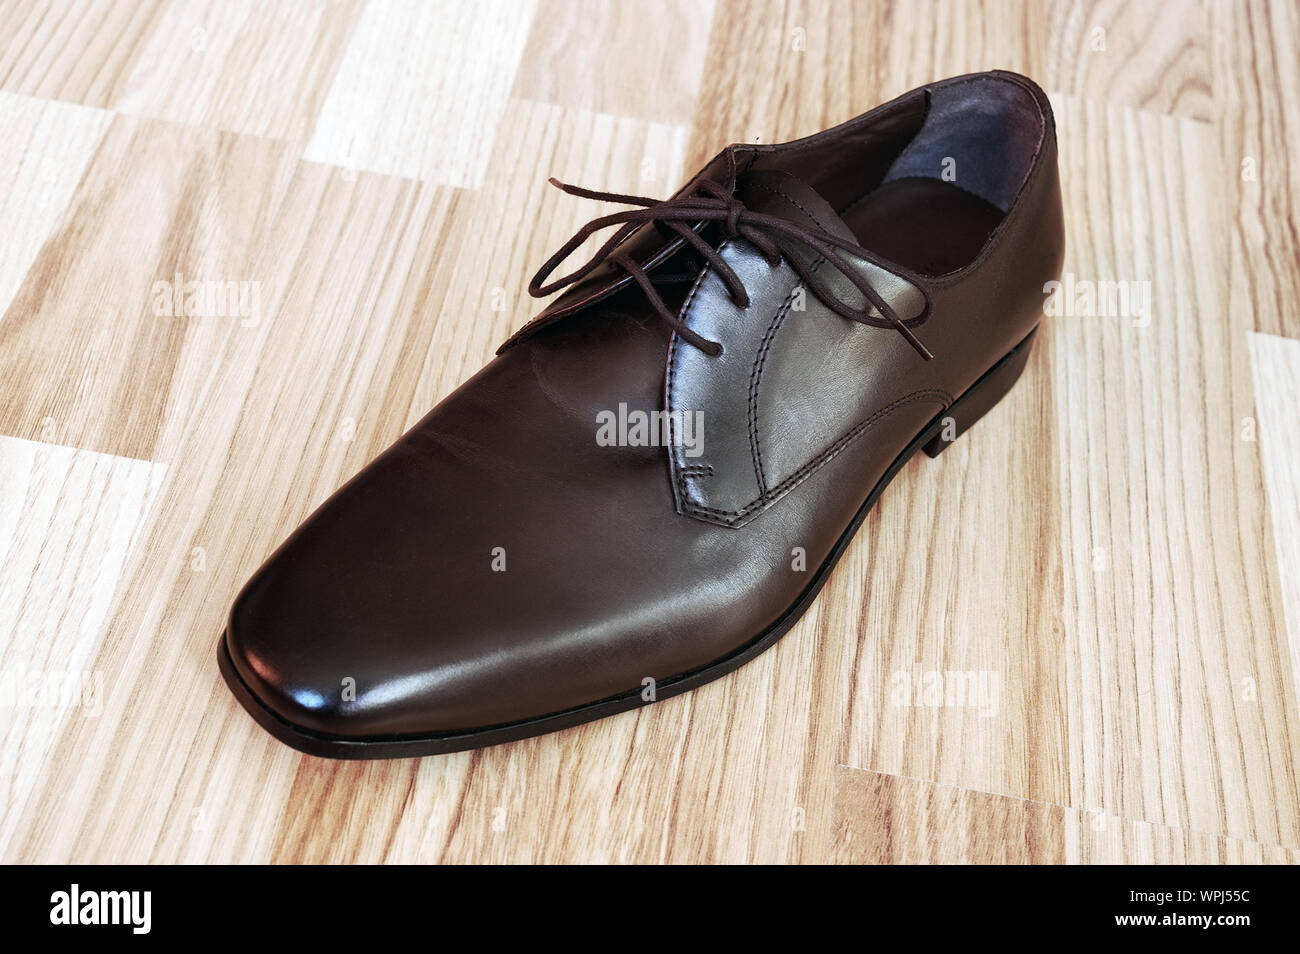 Close-up Of Leather Shoe On Hardwood Floor Stock Photo